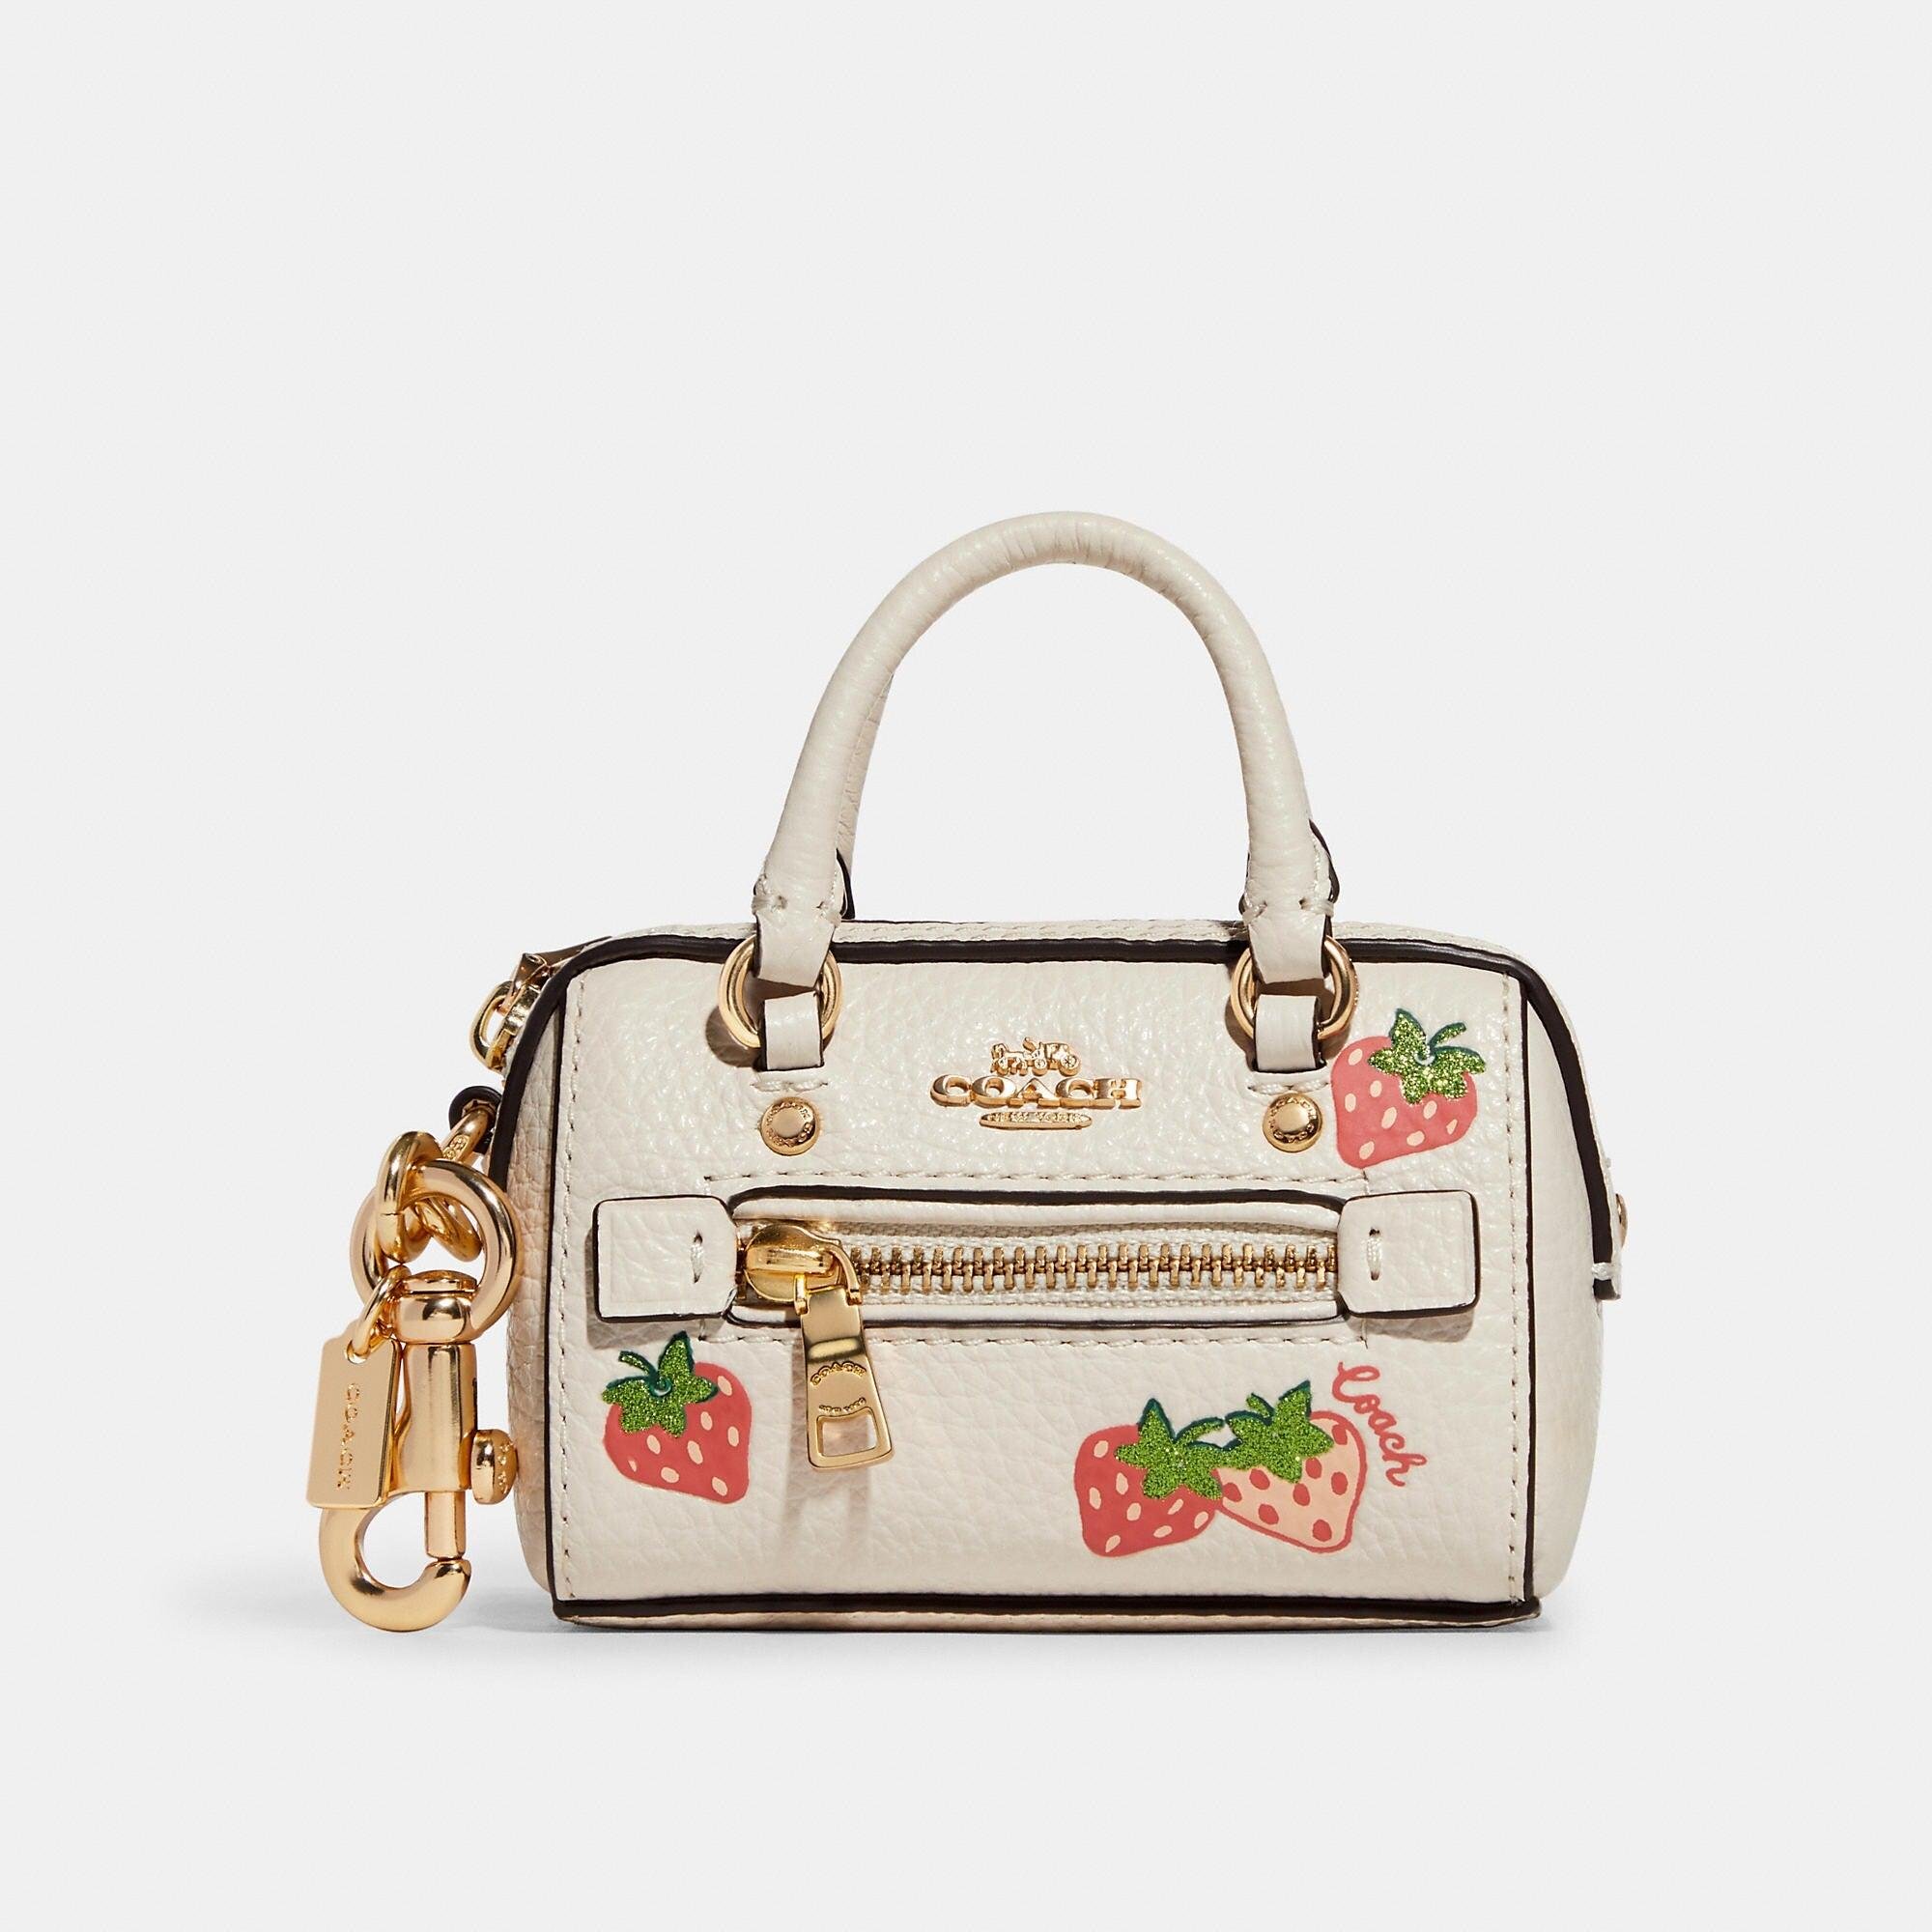 Coach Outlet Mini Rowan Satchel Bag Charm With Strawberry Print in Metallic